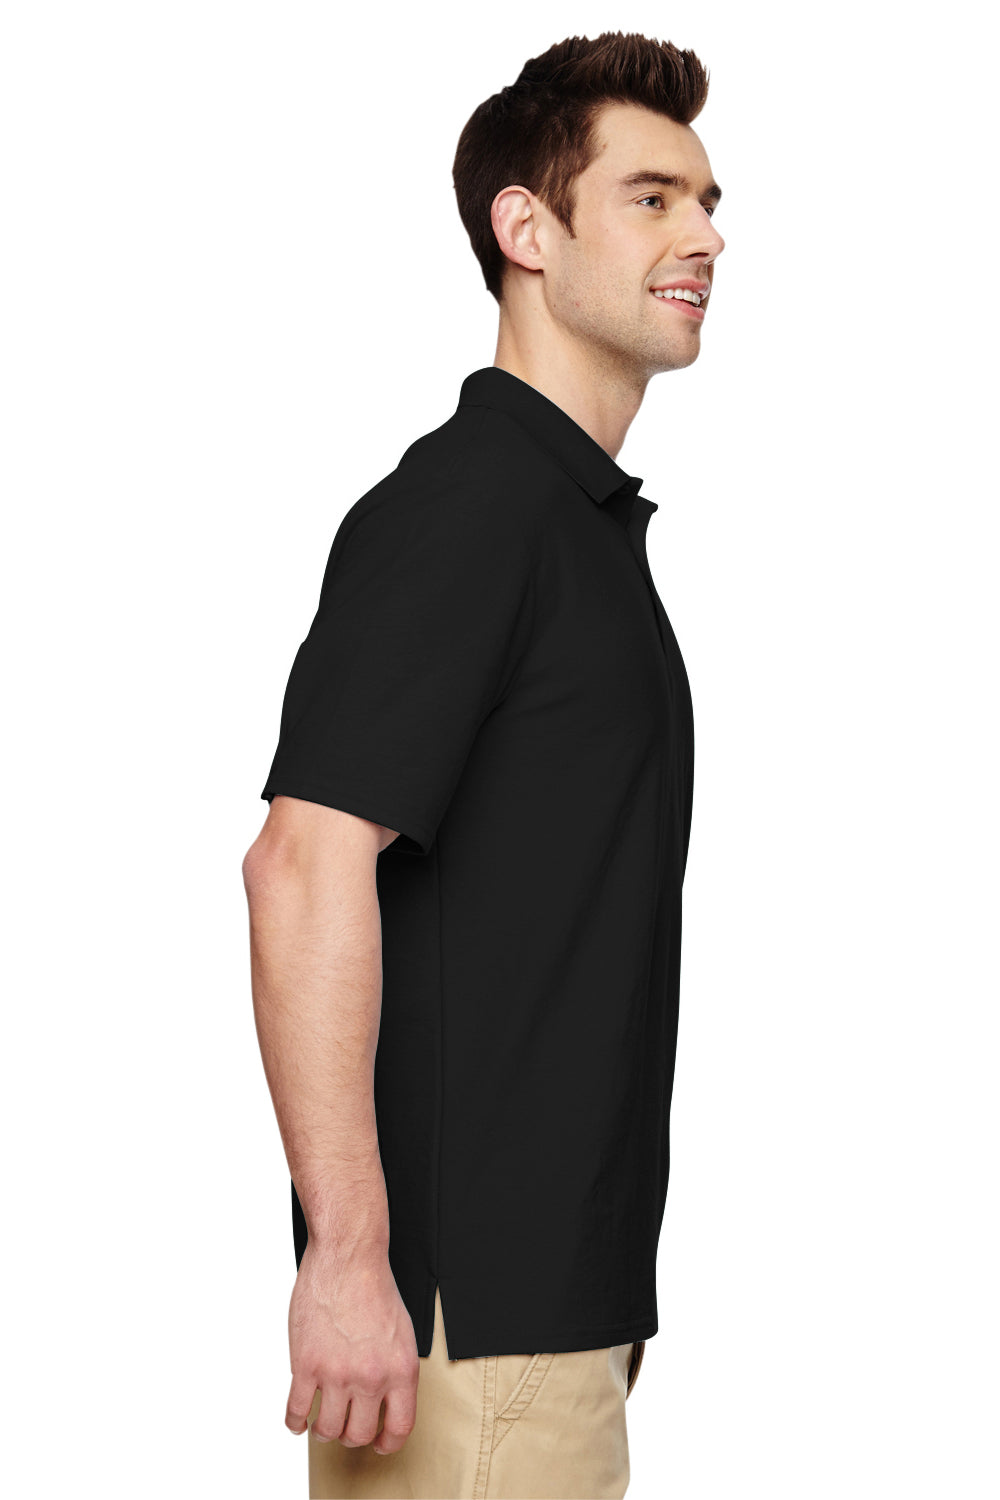 Gildan G728 Mens DryBlend Moisture Wicking Short Sleeve Polo Shirt Black Side